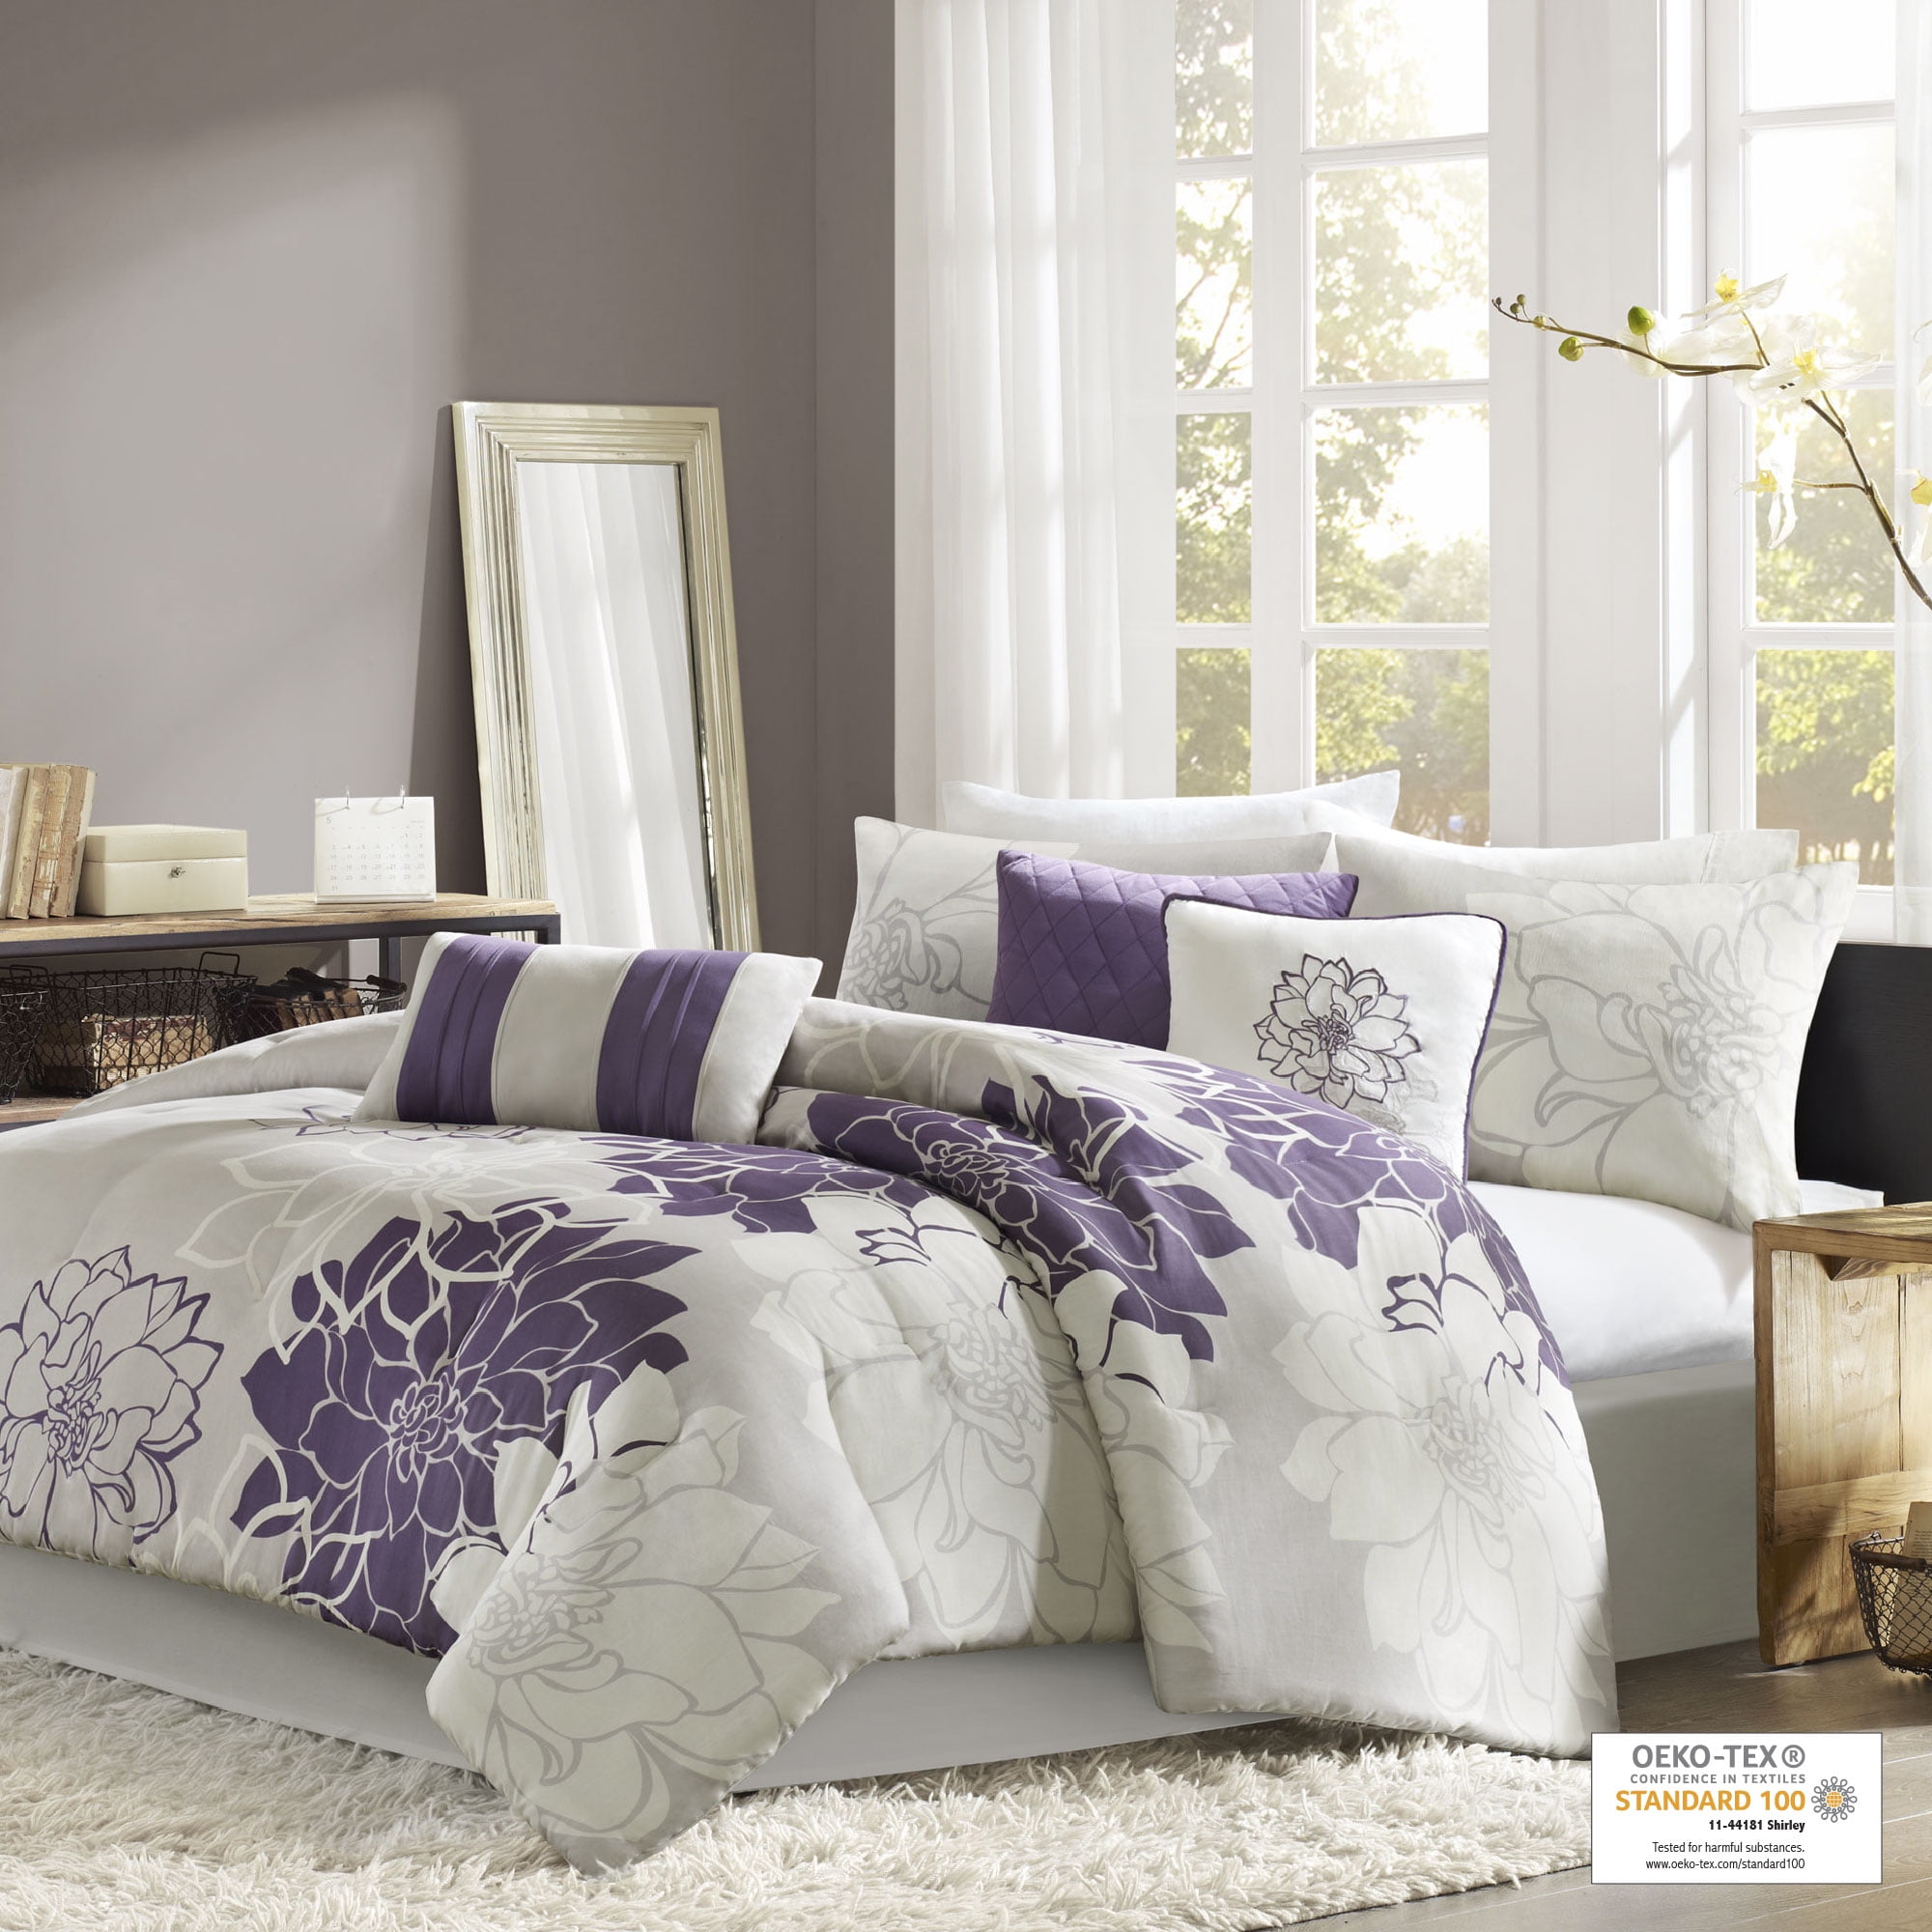 Madison Park Lola 7 Piece Print Comforter Set, Queen, Grey/Purple